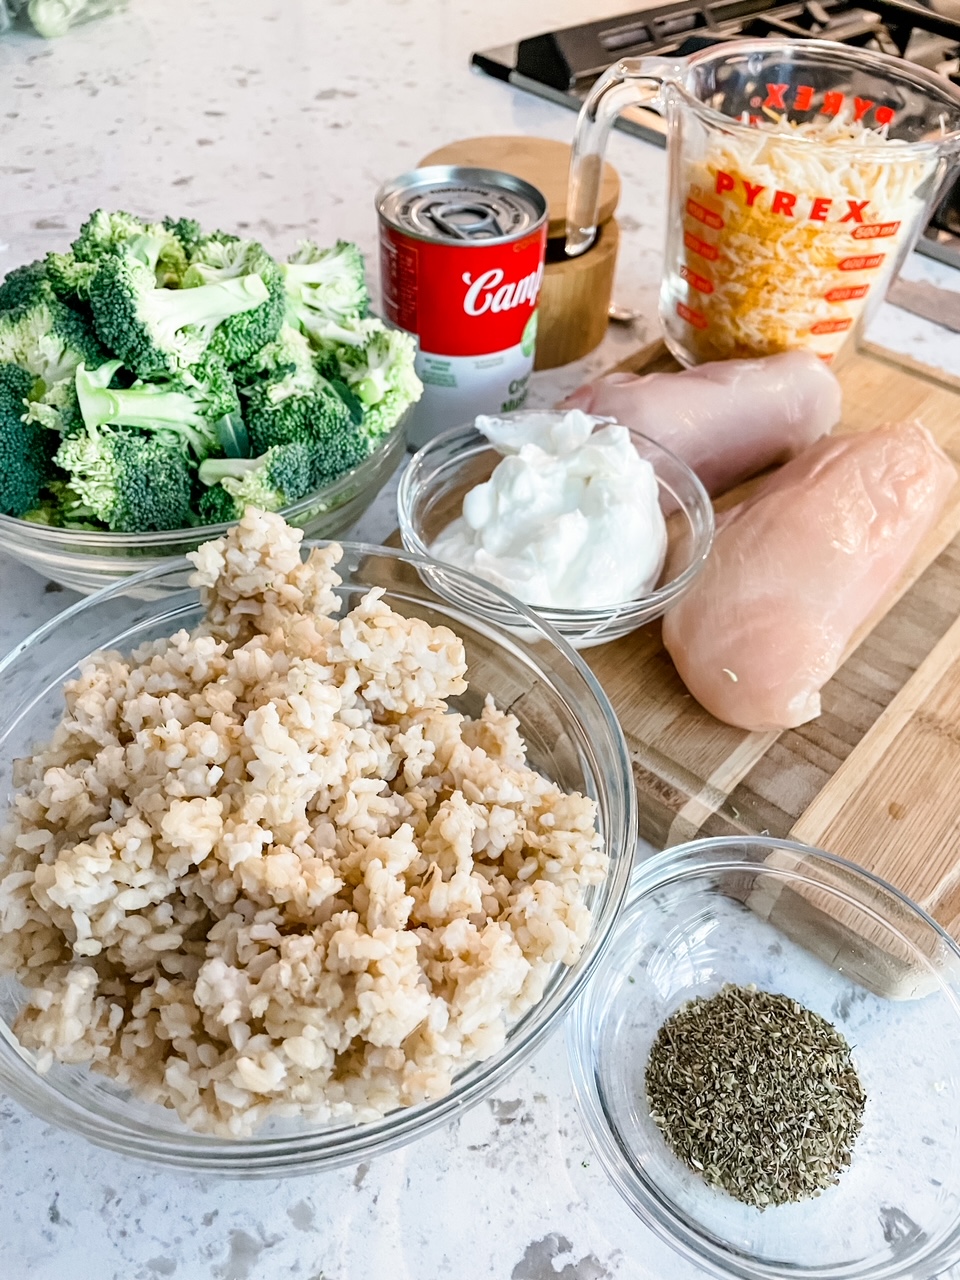 Healthier Broccoli Chicken Casserole Recipe